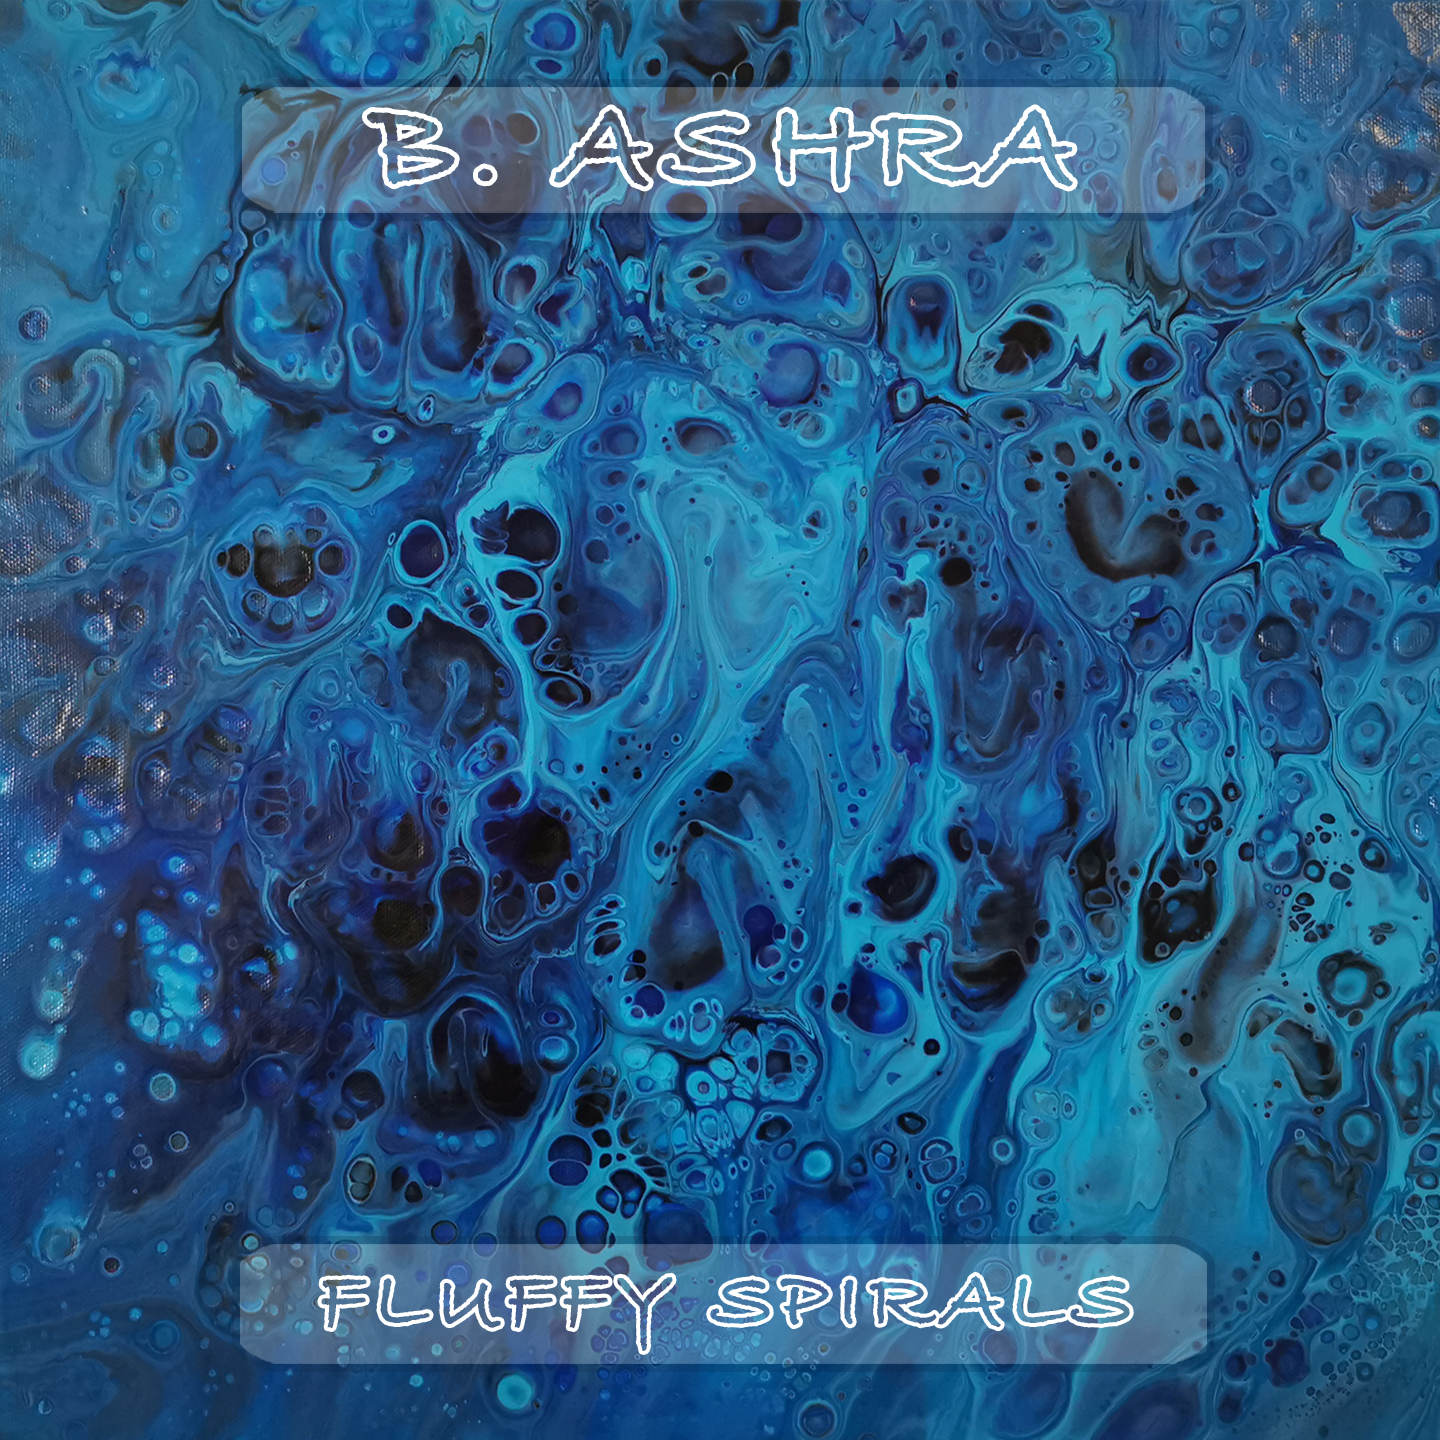 Albumcover B. Ashra - Fluffy Spirals